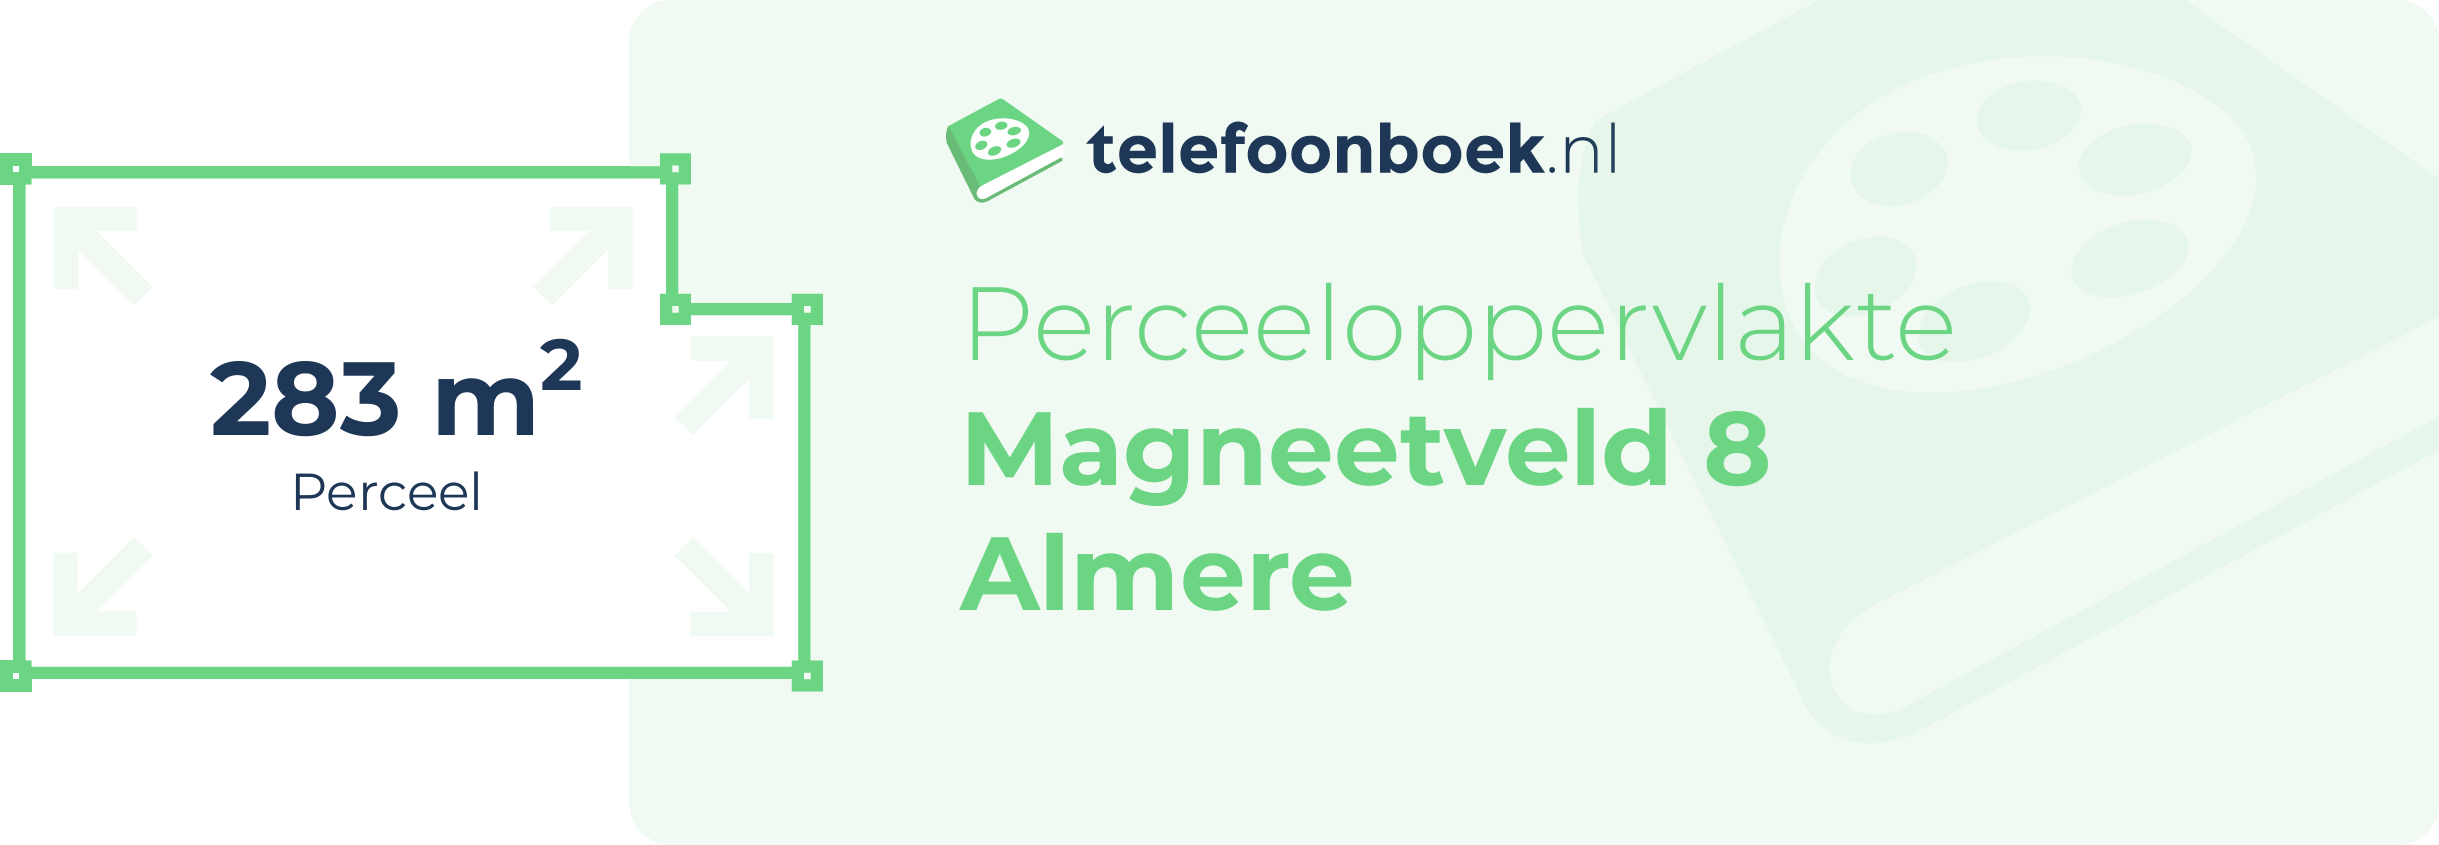 Perceeloppervlakte Magneetveld 8 Almere